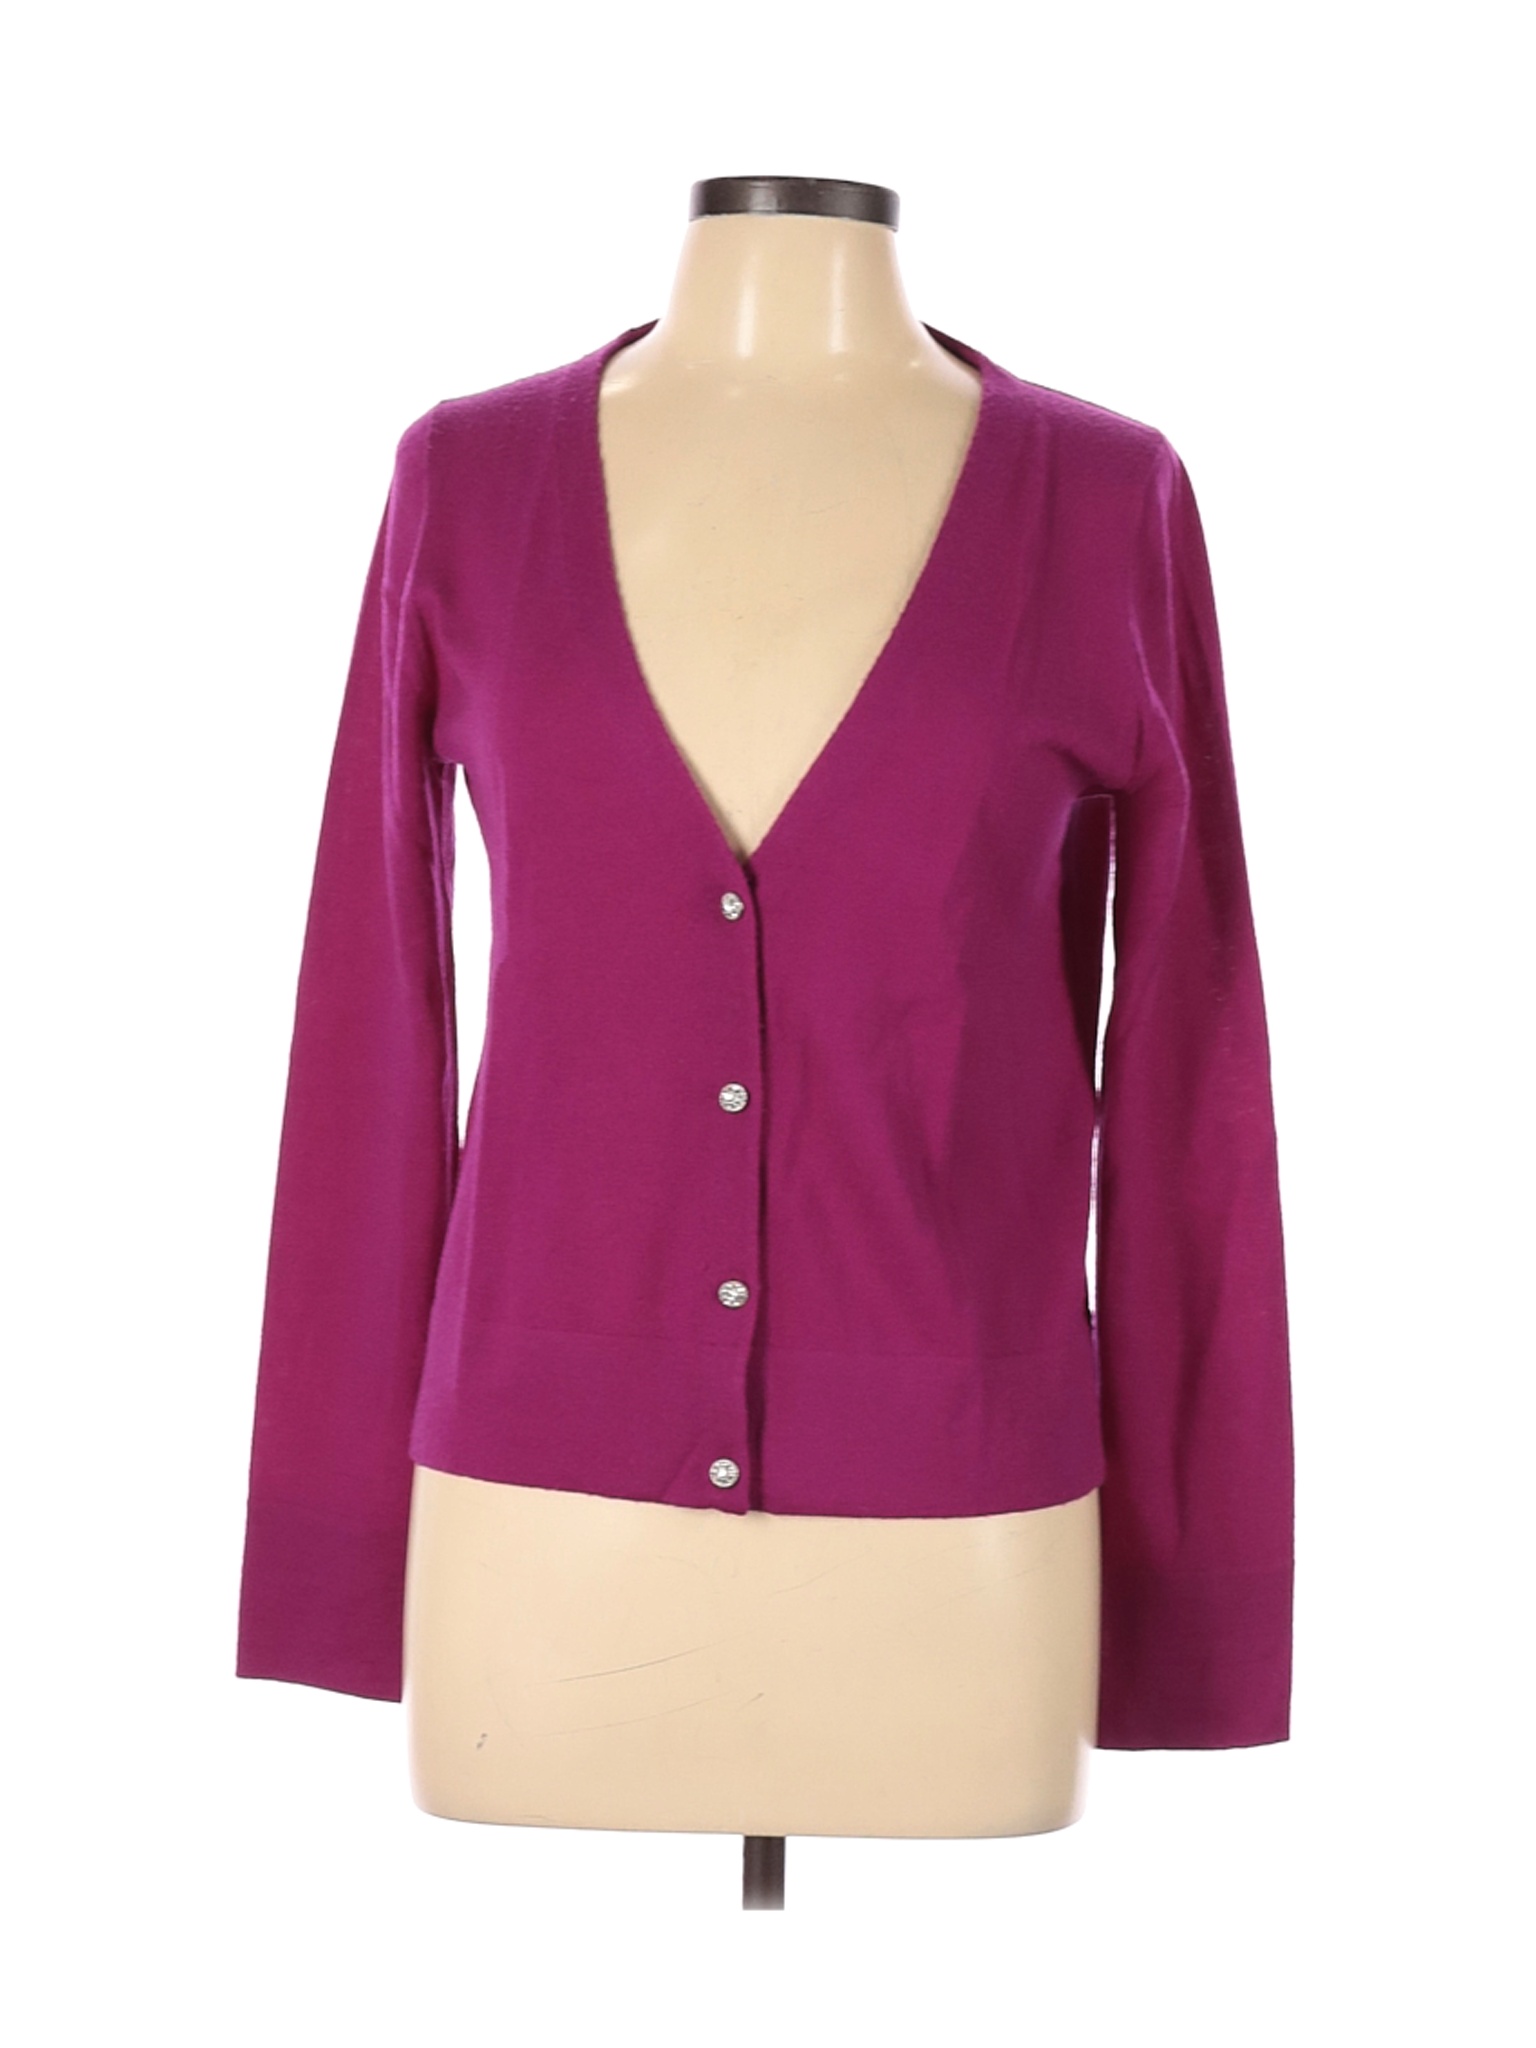 J.Crew Women Purple Wool Cardigan L | eBay